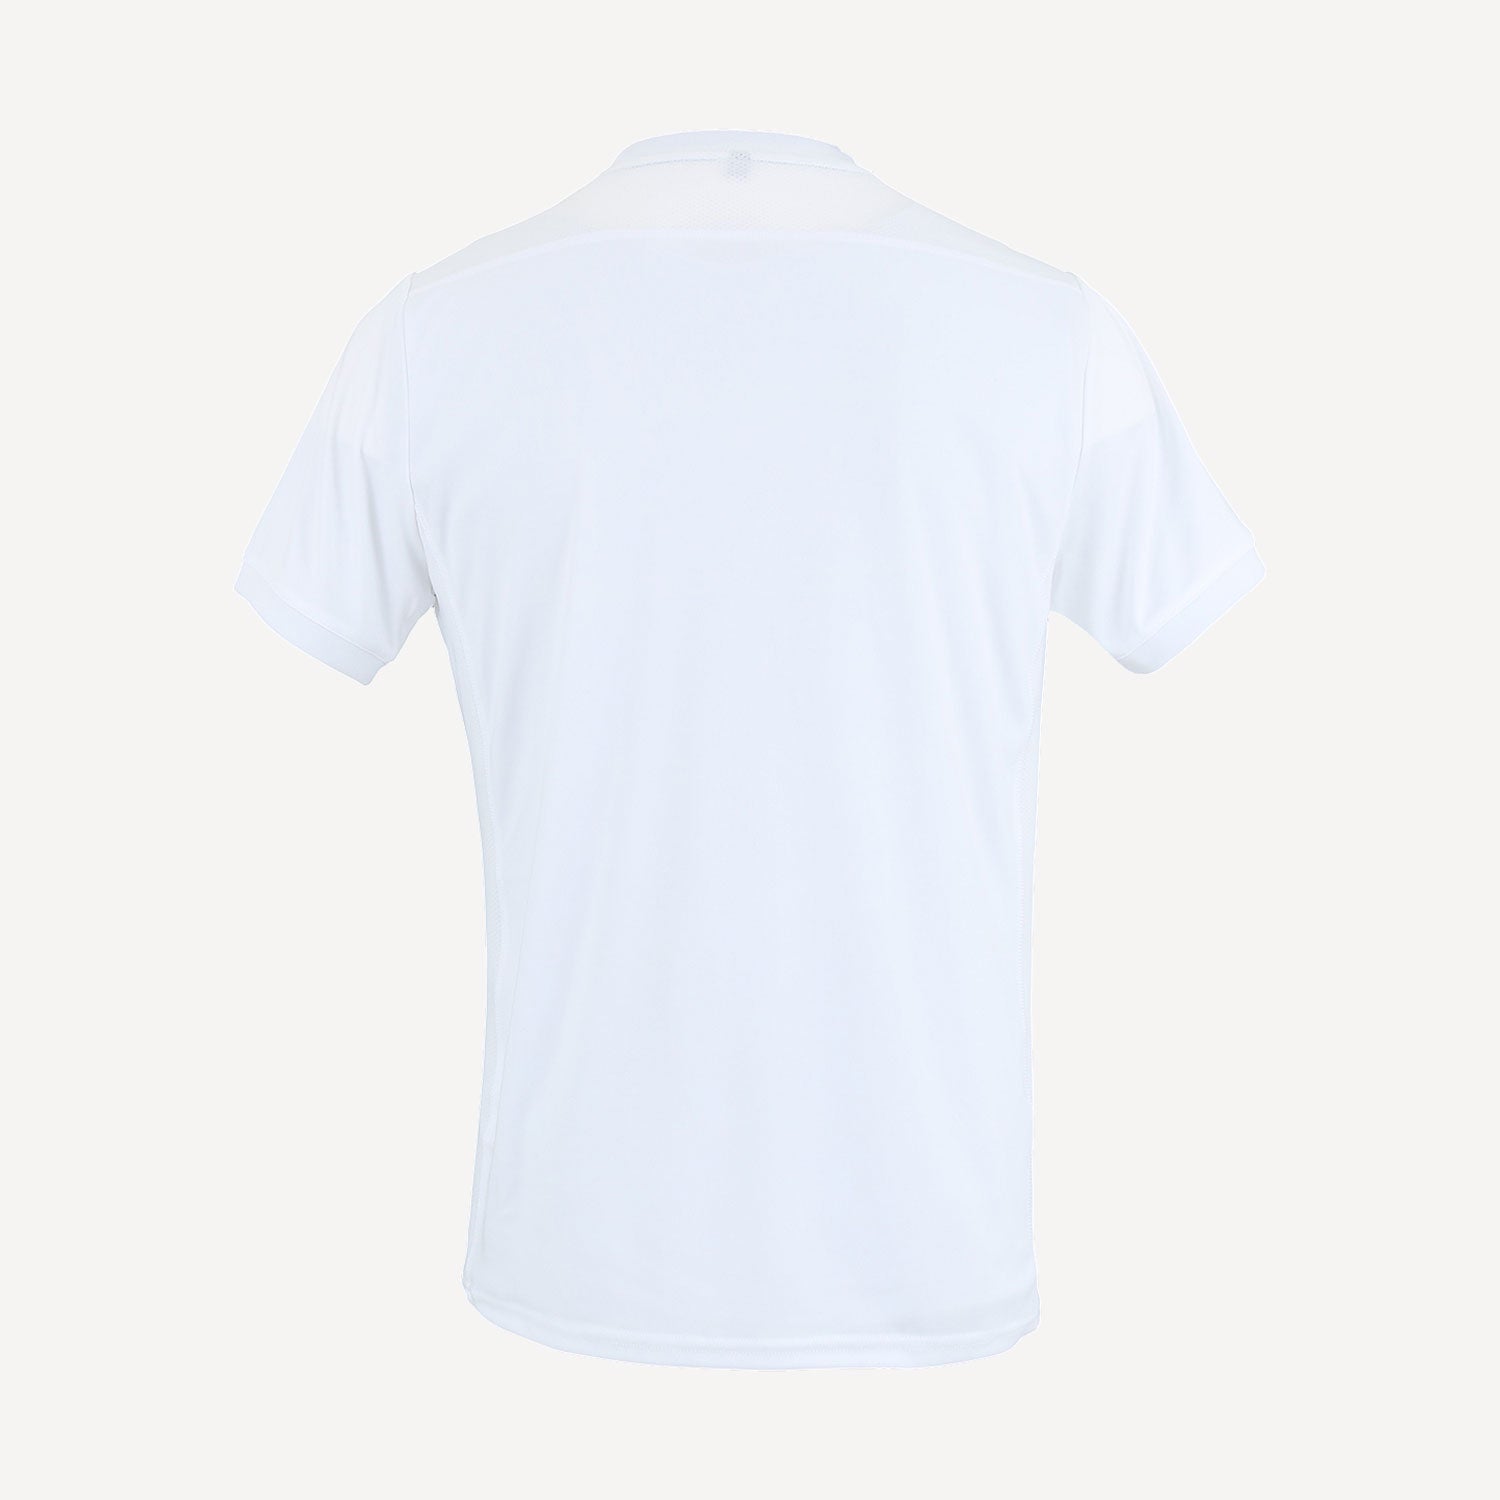 The Indian Maharadja Kadiri Boys' Tennis Shirt - TV Victoria White (2)